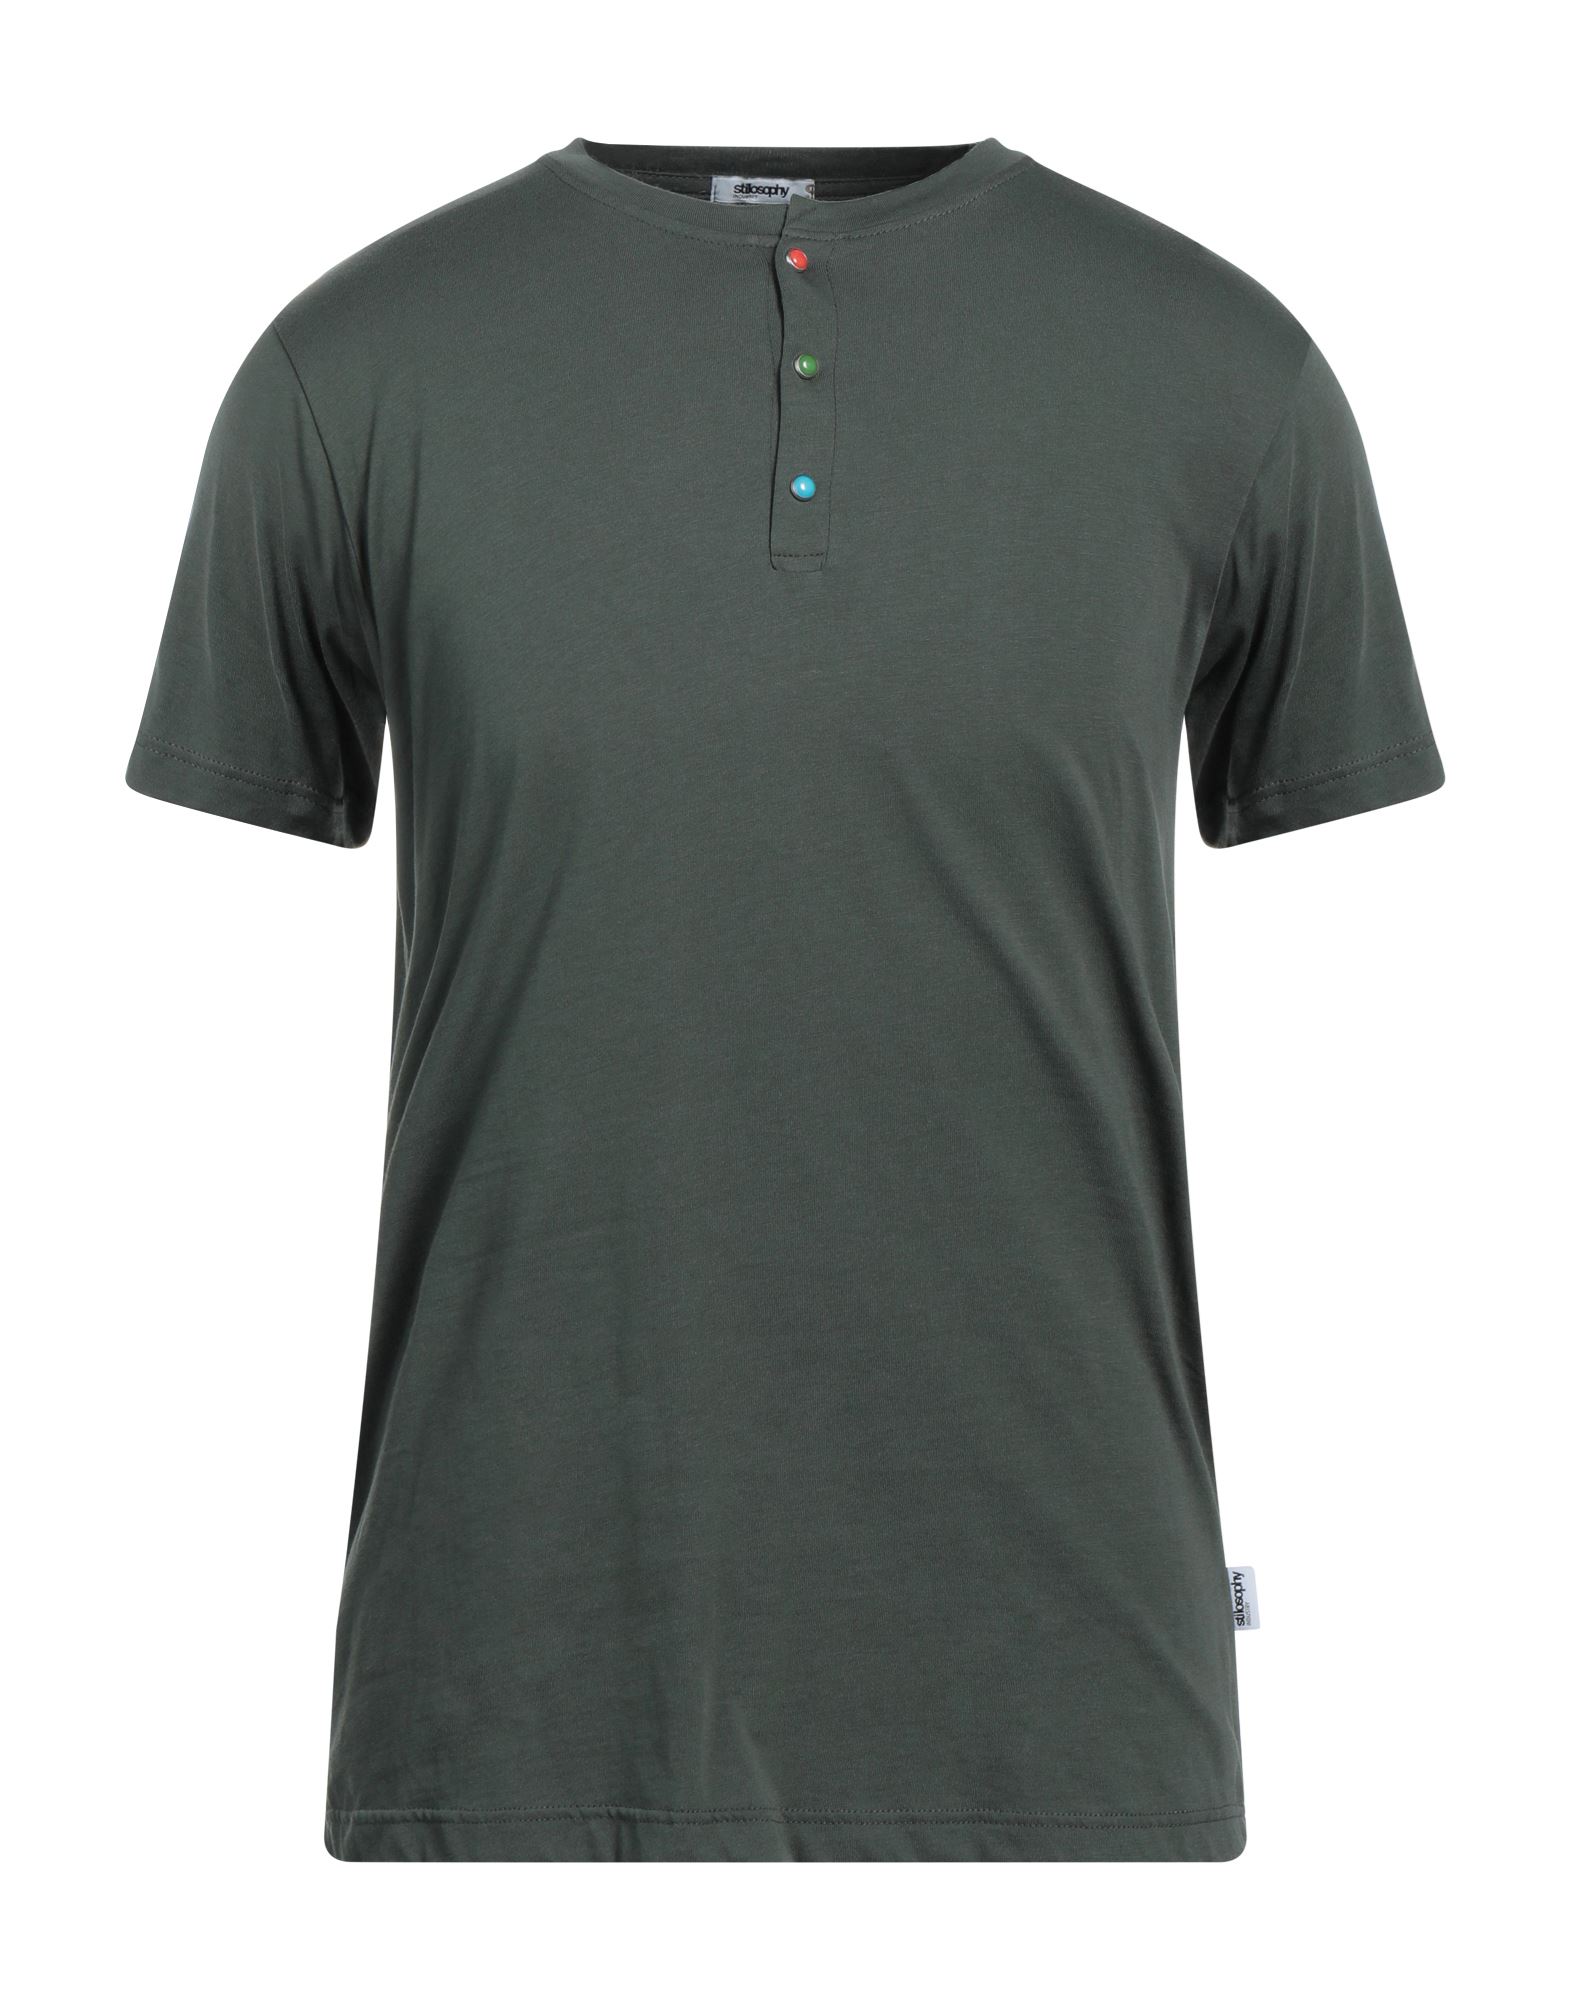 Stilosophy Man T-shirt Military Green Size Xxl Cotton